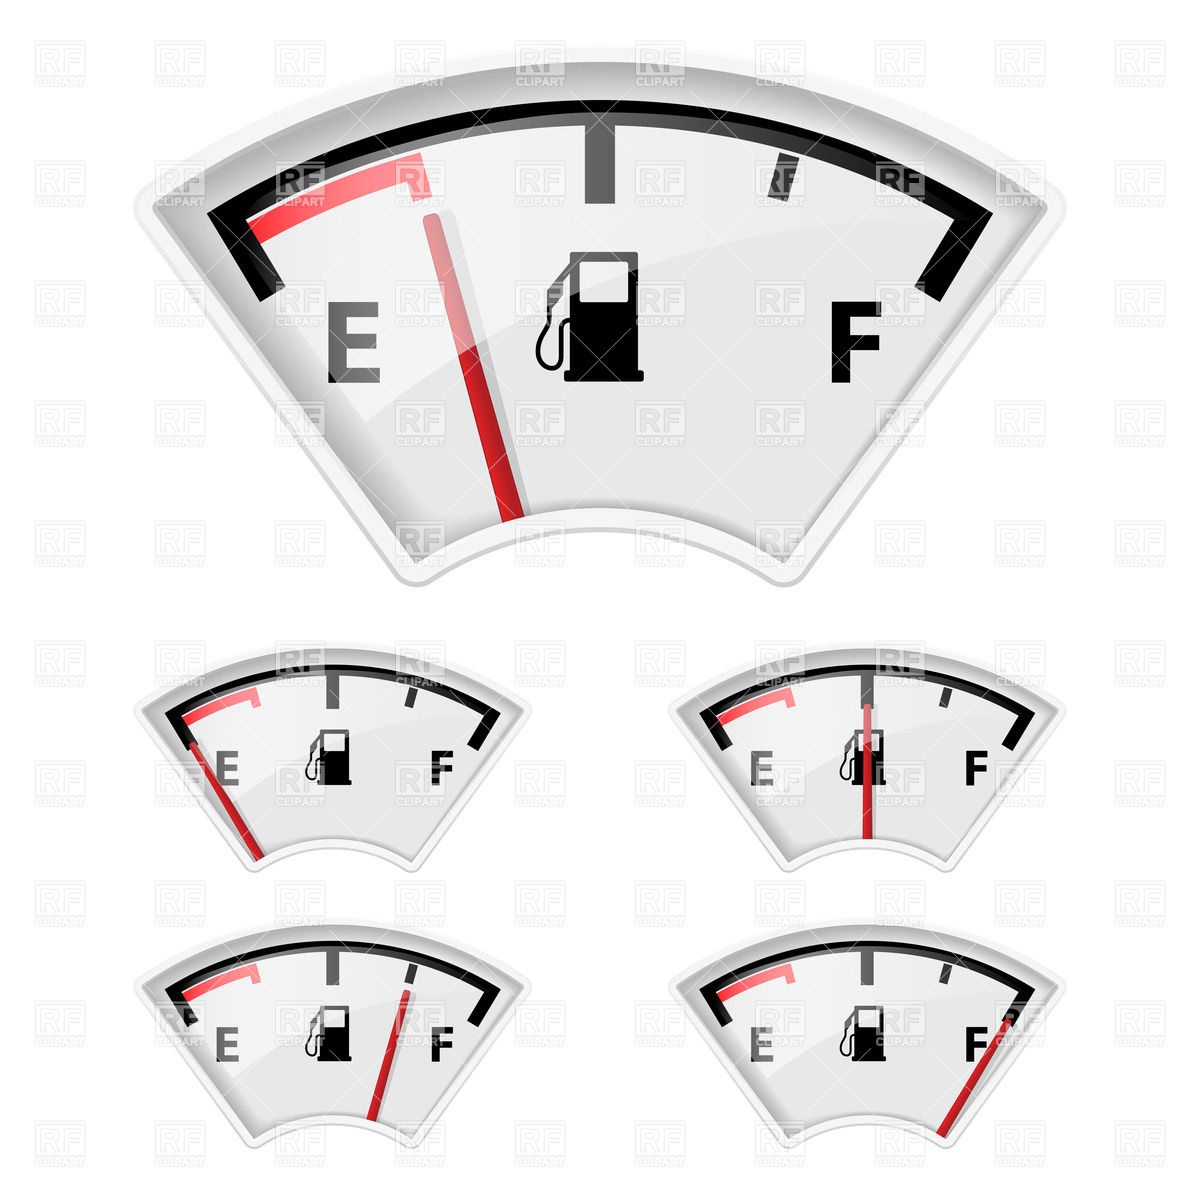     Fuel Gauge Clipart Displaying 20 Images For Fuel Gauge Clipart Toolbar